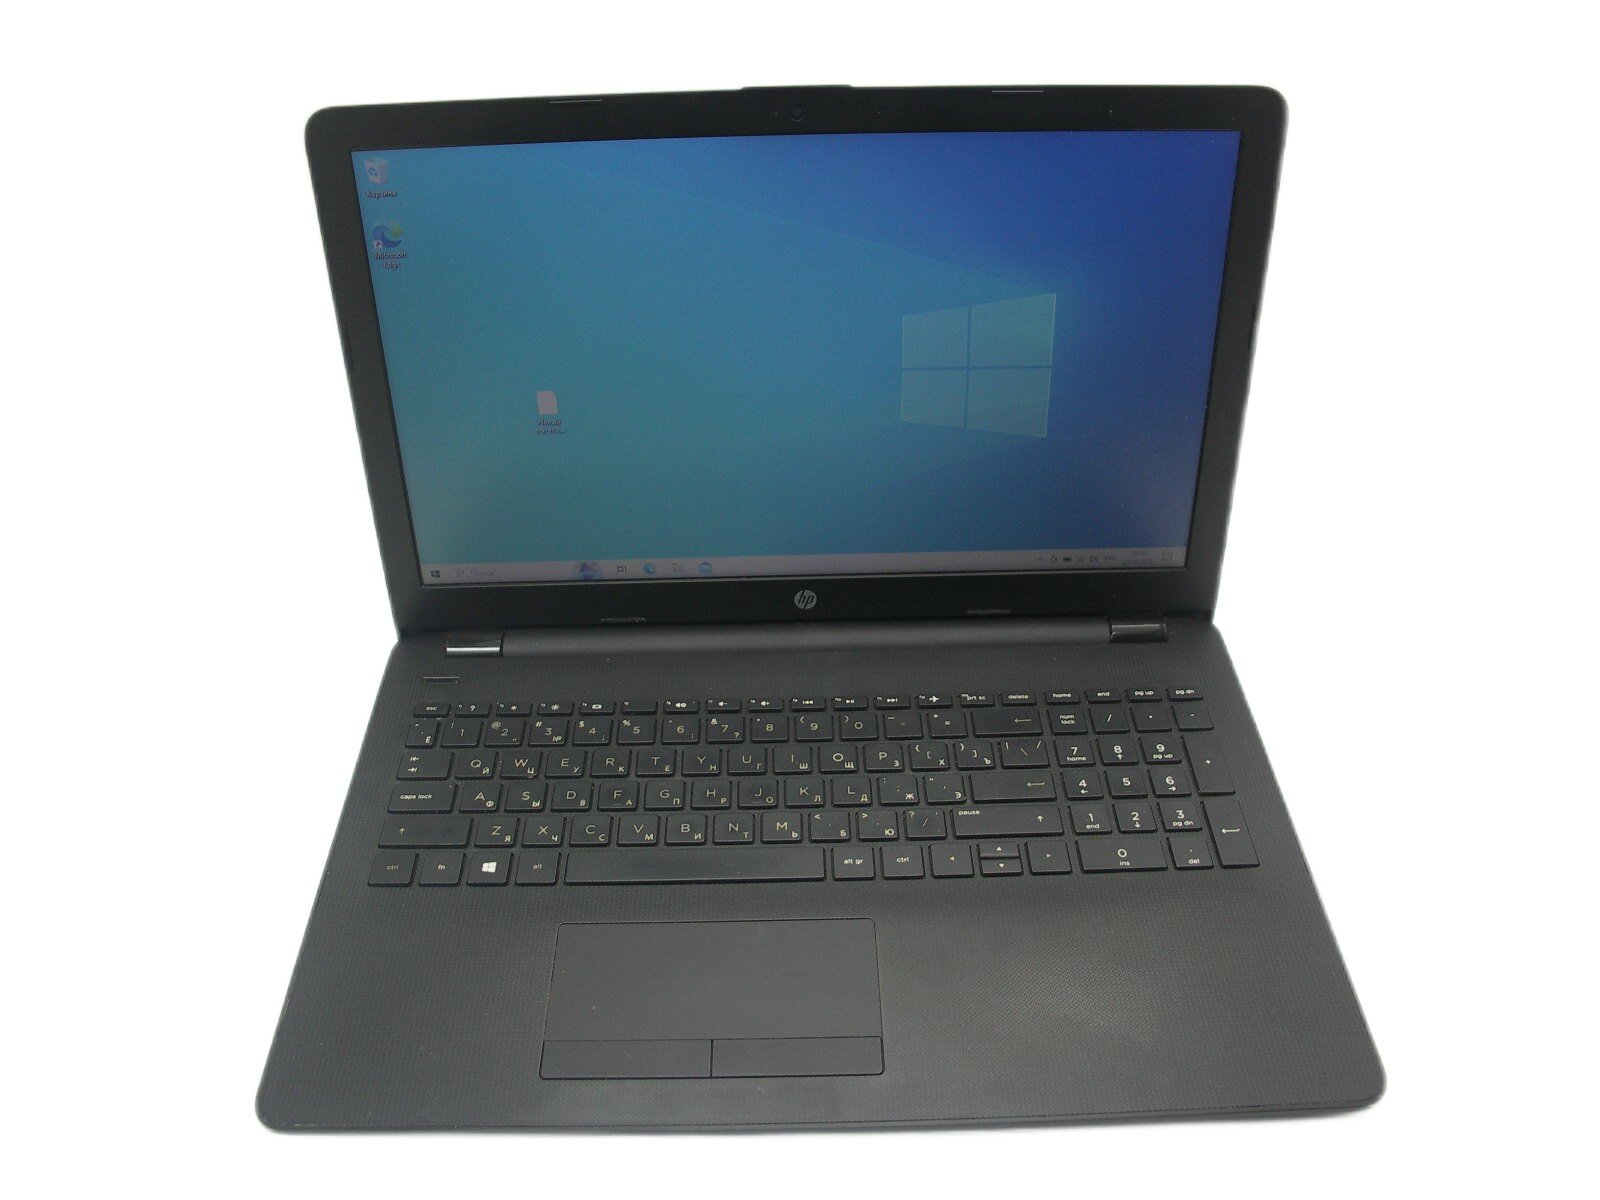 Ноутбук HP 15-af005ur AMD A4-9120+Radeon R3 2,2 GHz/8G/240Gb SSD/WIFI/Cam/Win10Home 15,6" (батарея 90мин)